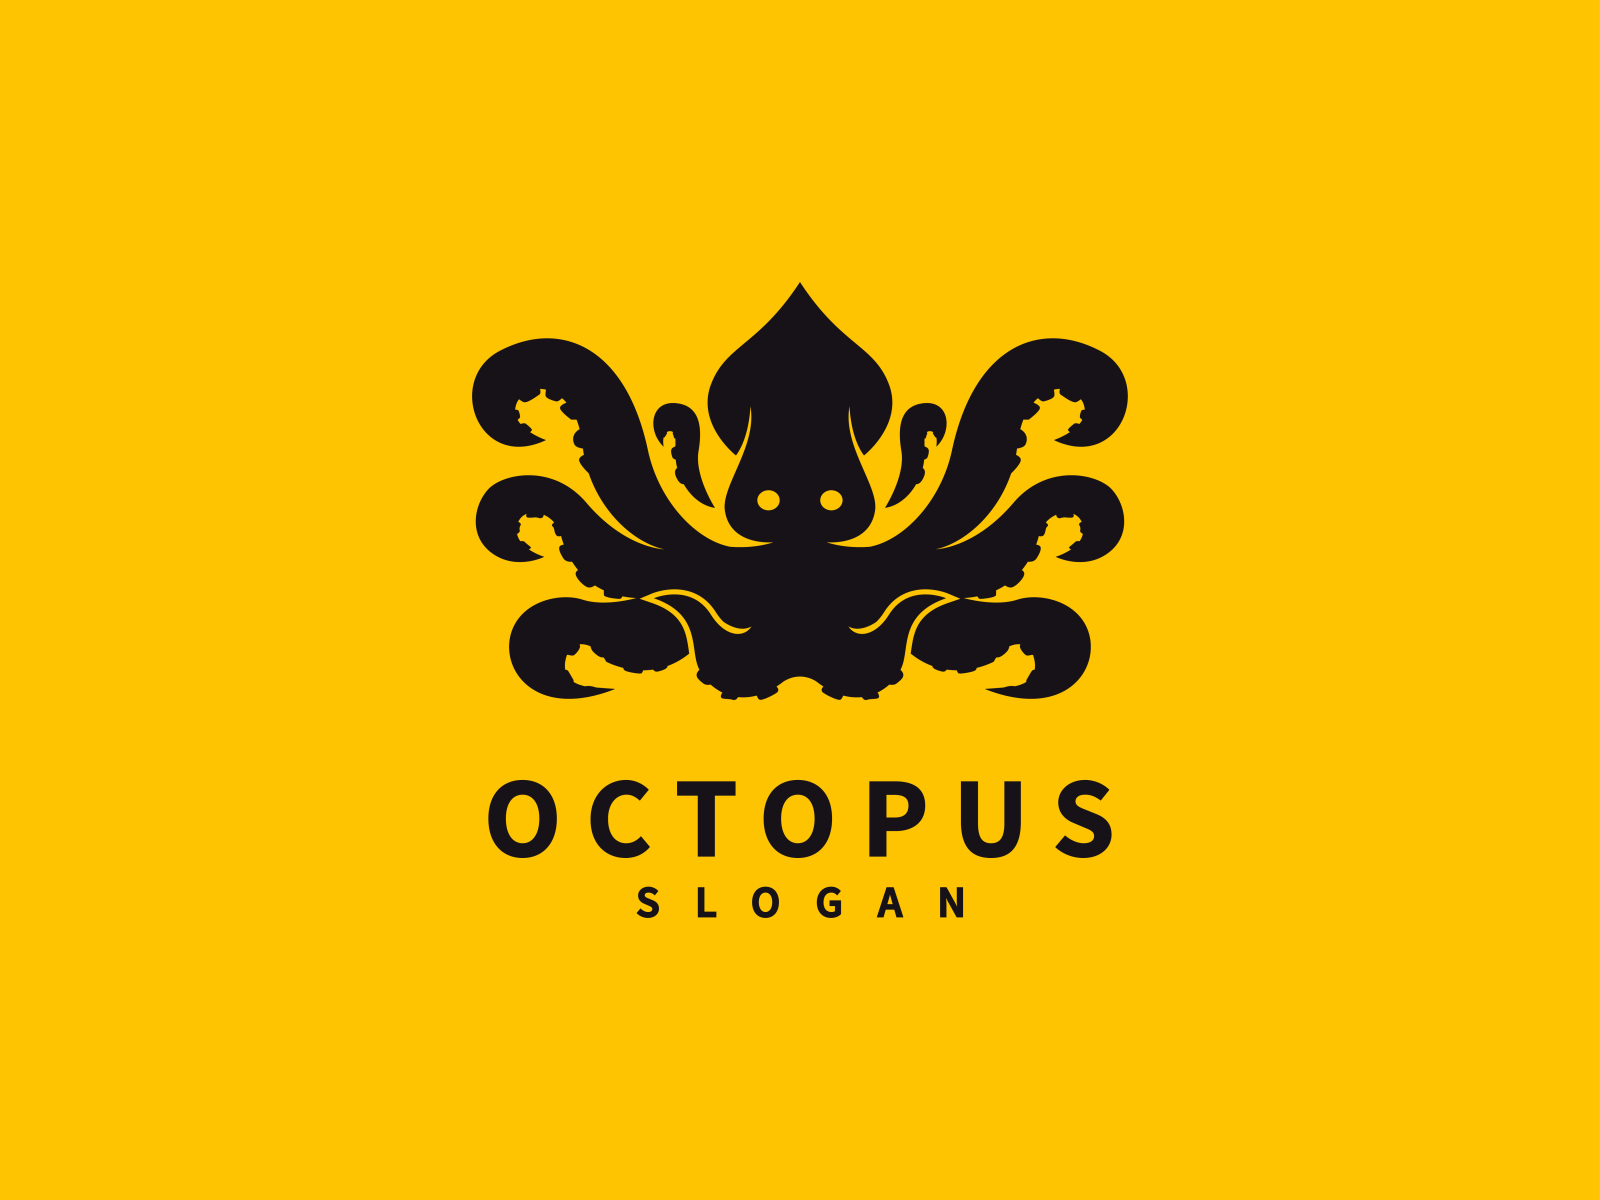 Octopus silhouette logo vector illustration by vexperlogo on Dribbble